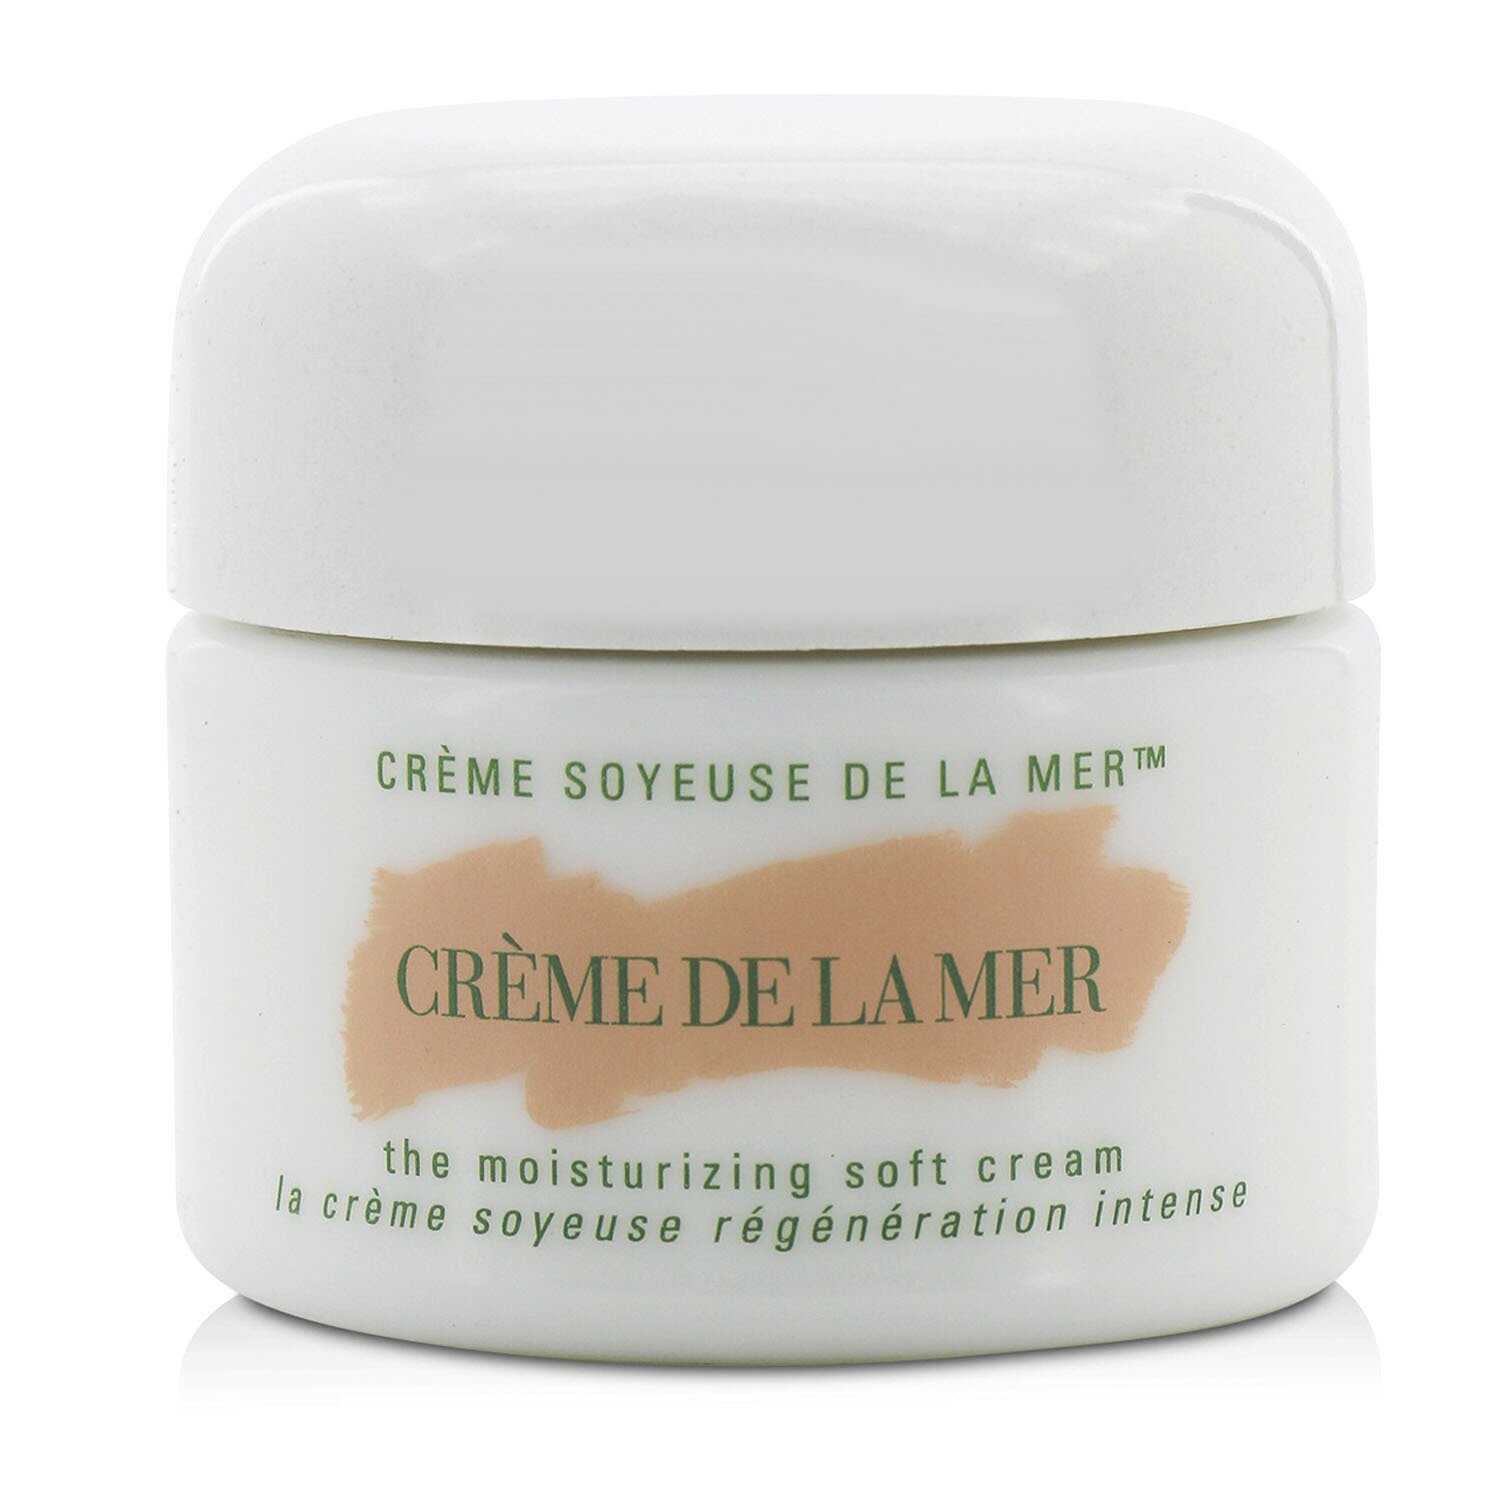 La Mer The Moisturizing Soft Cream 30ml/1oz